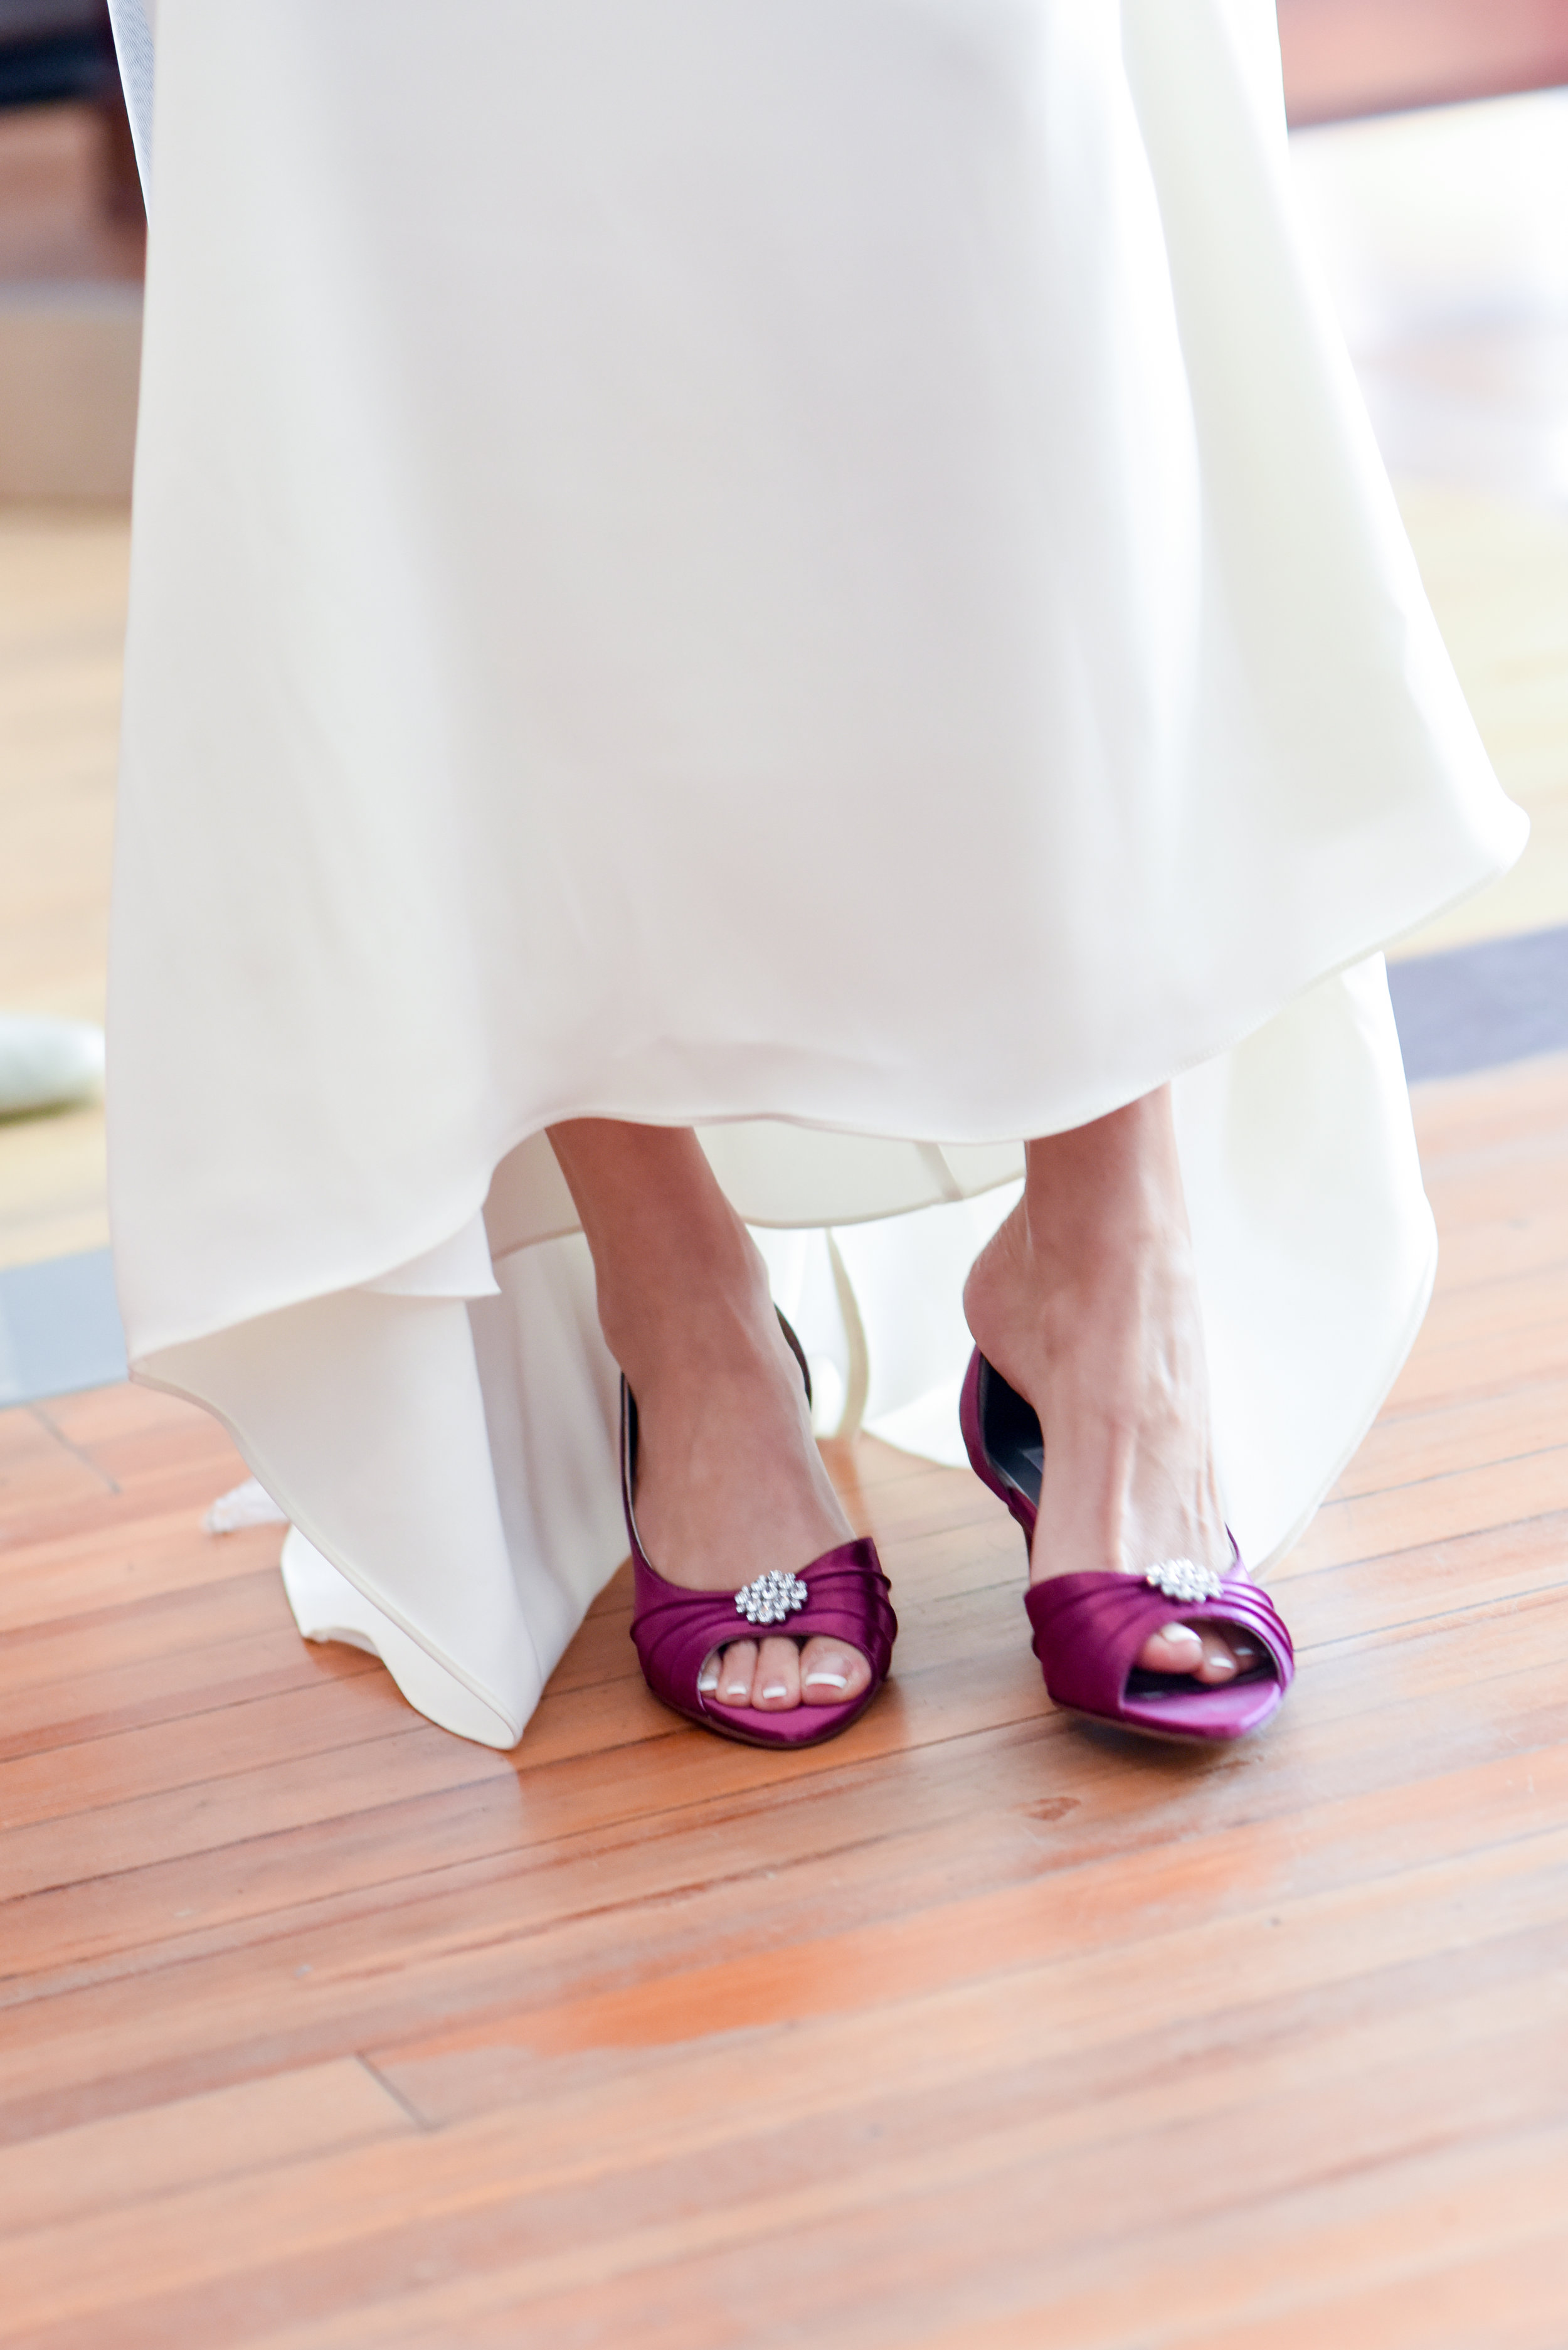 asheville-wedding-shoes.jpg